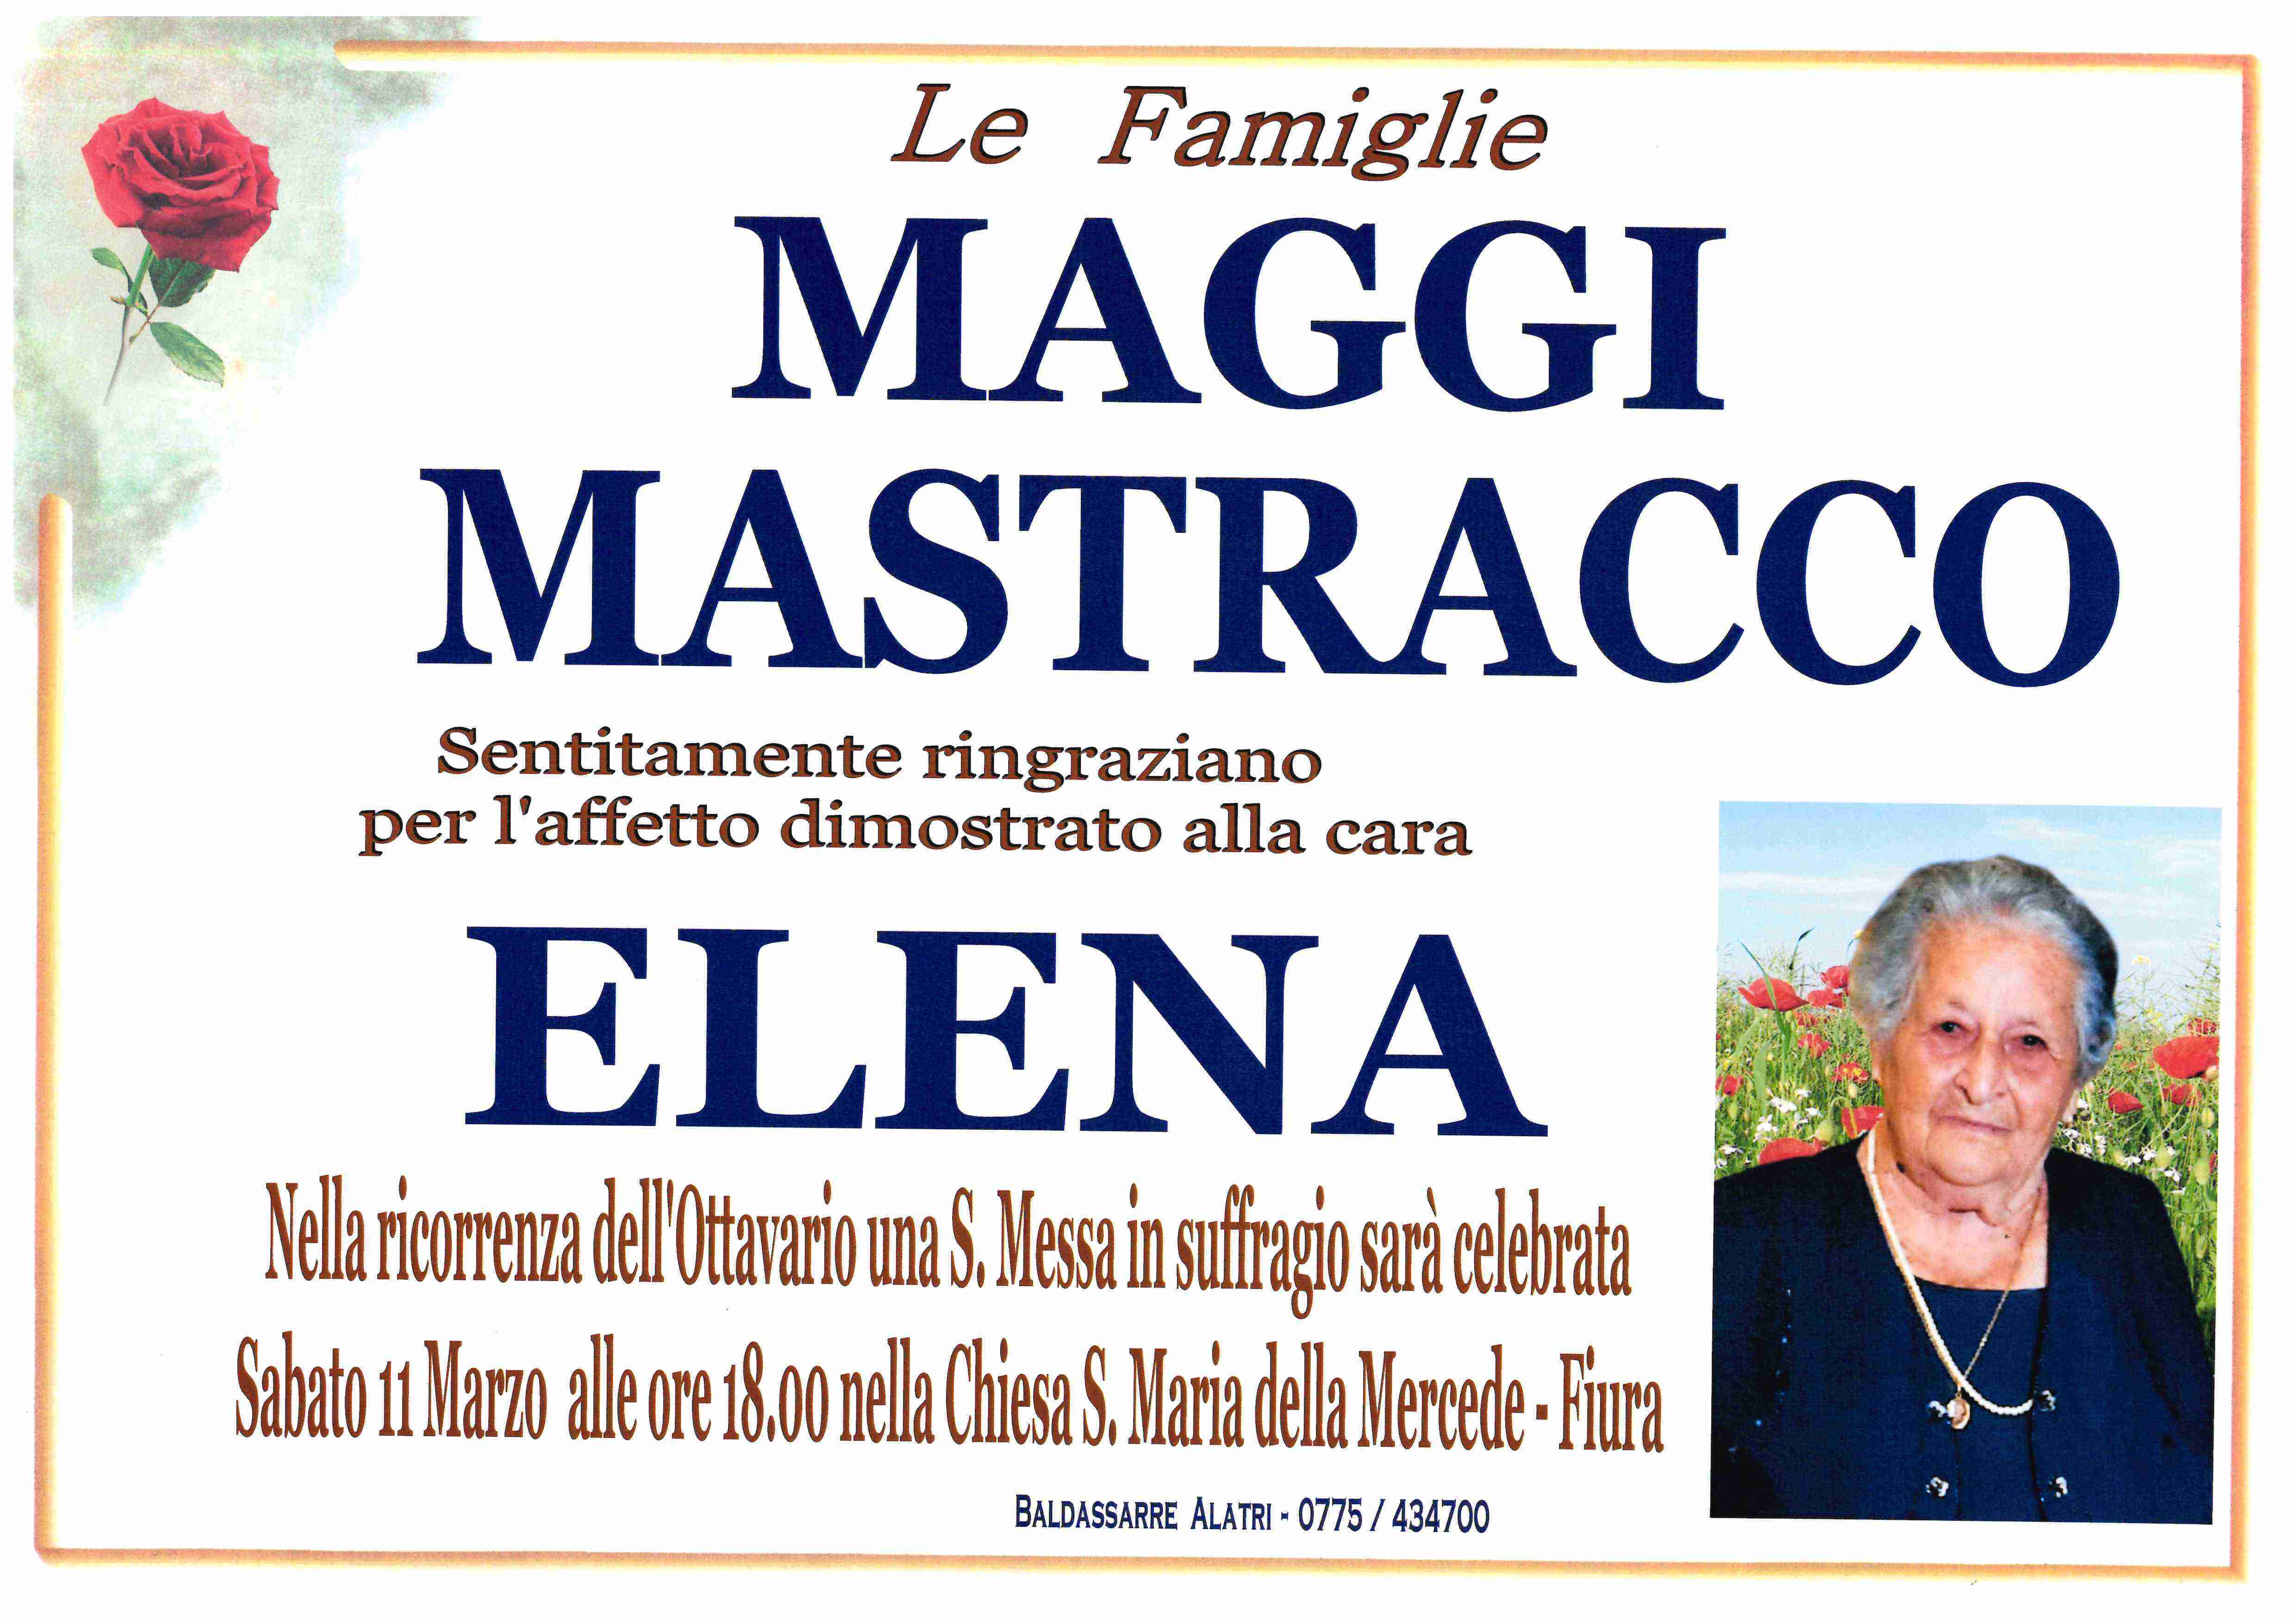 Elena Maggi